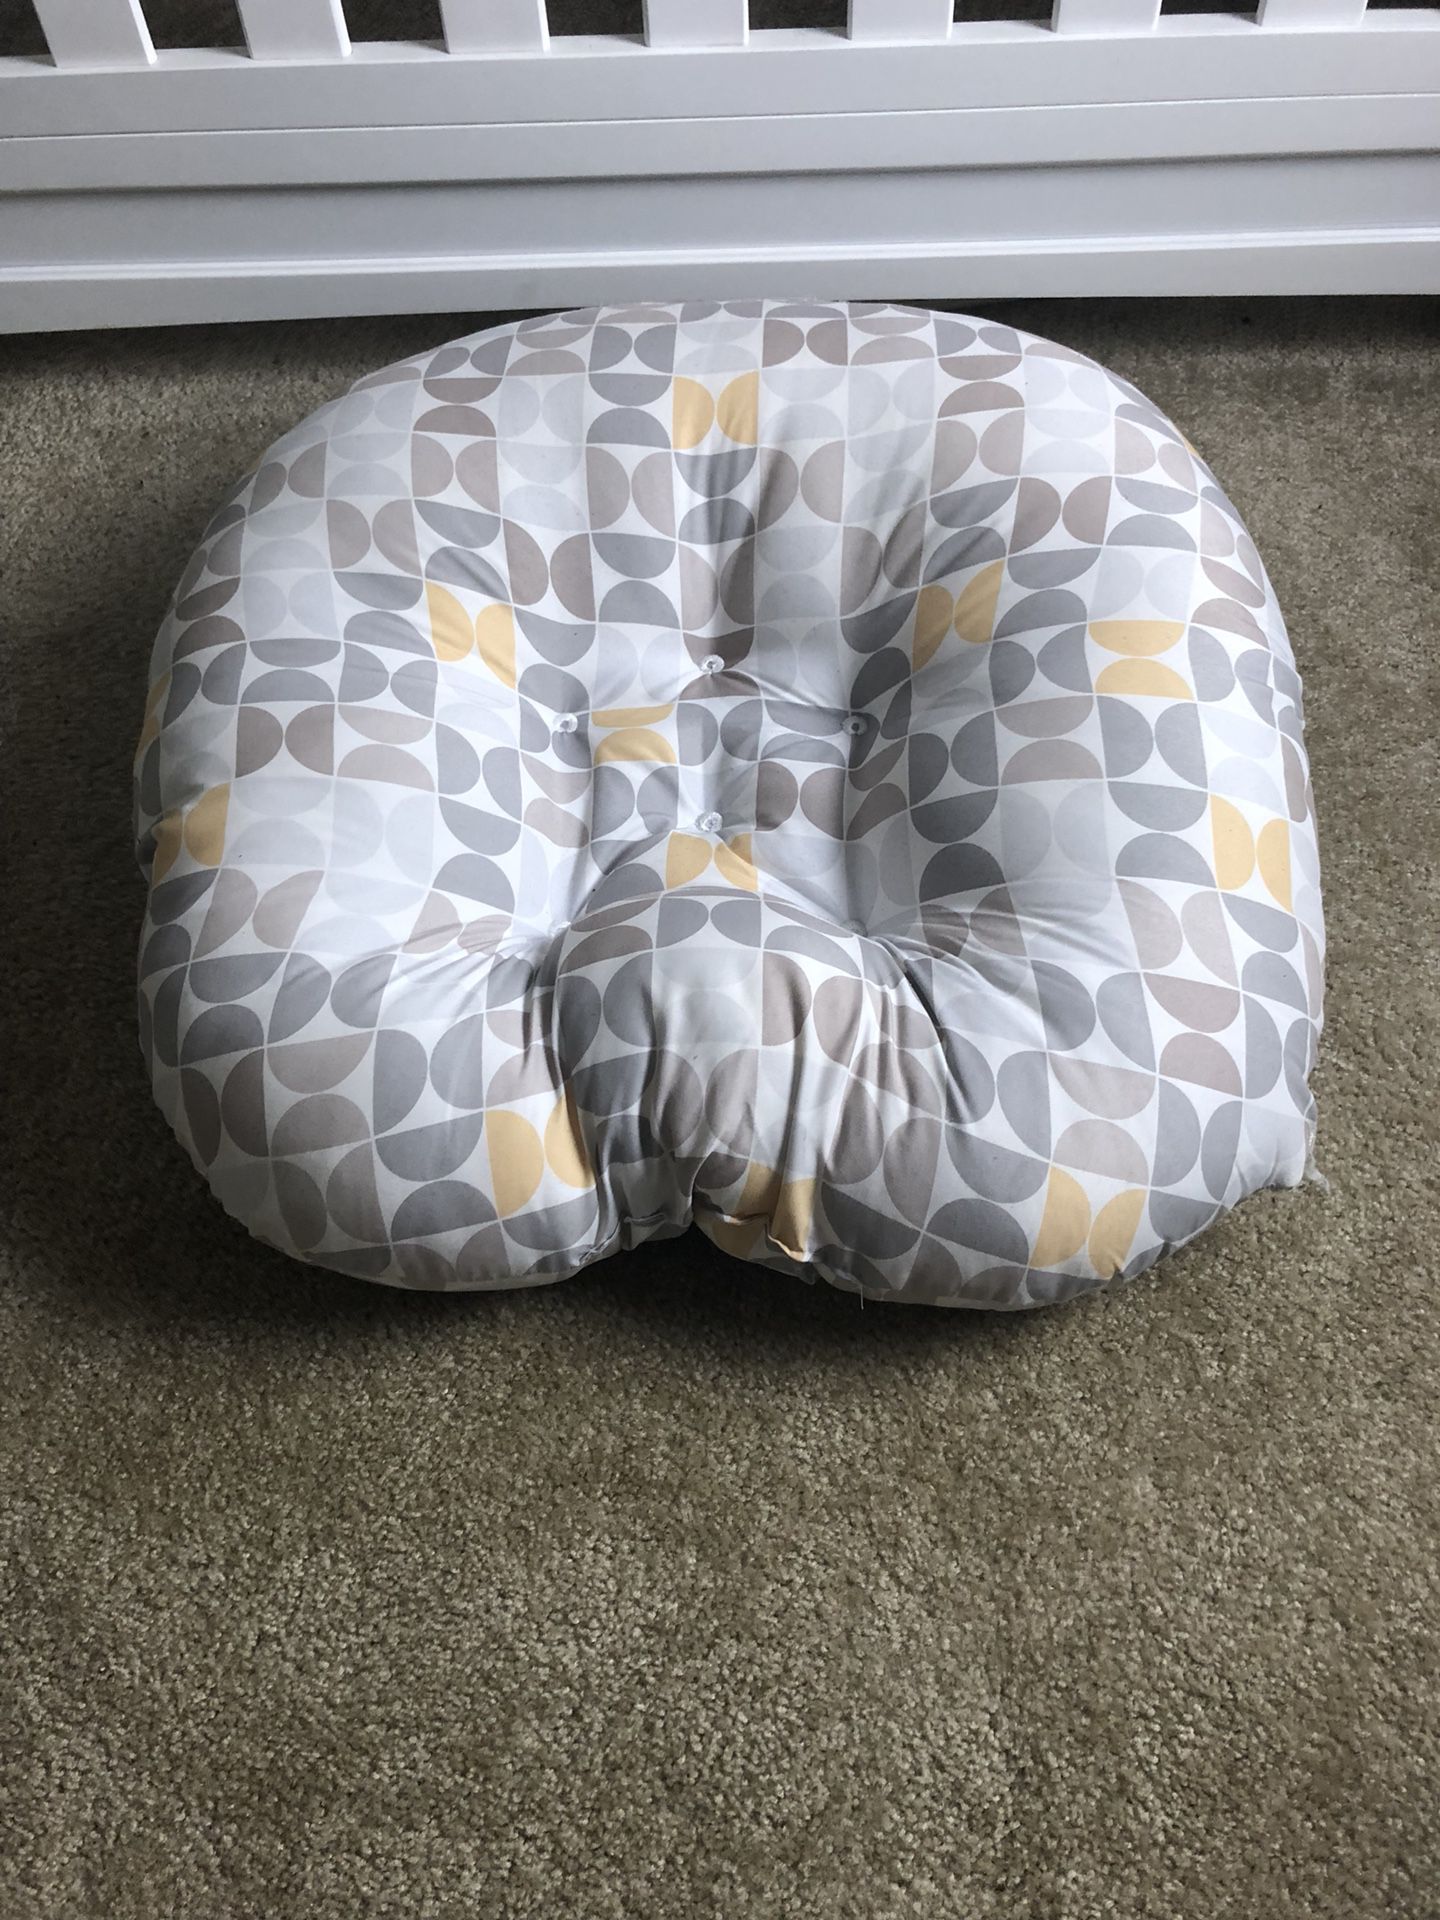 Boppy Newborn Pillow